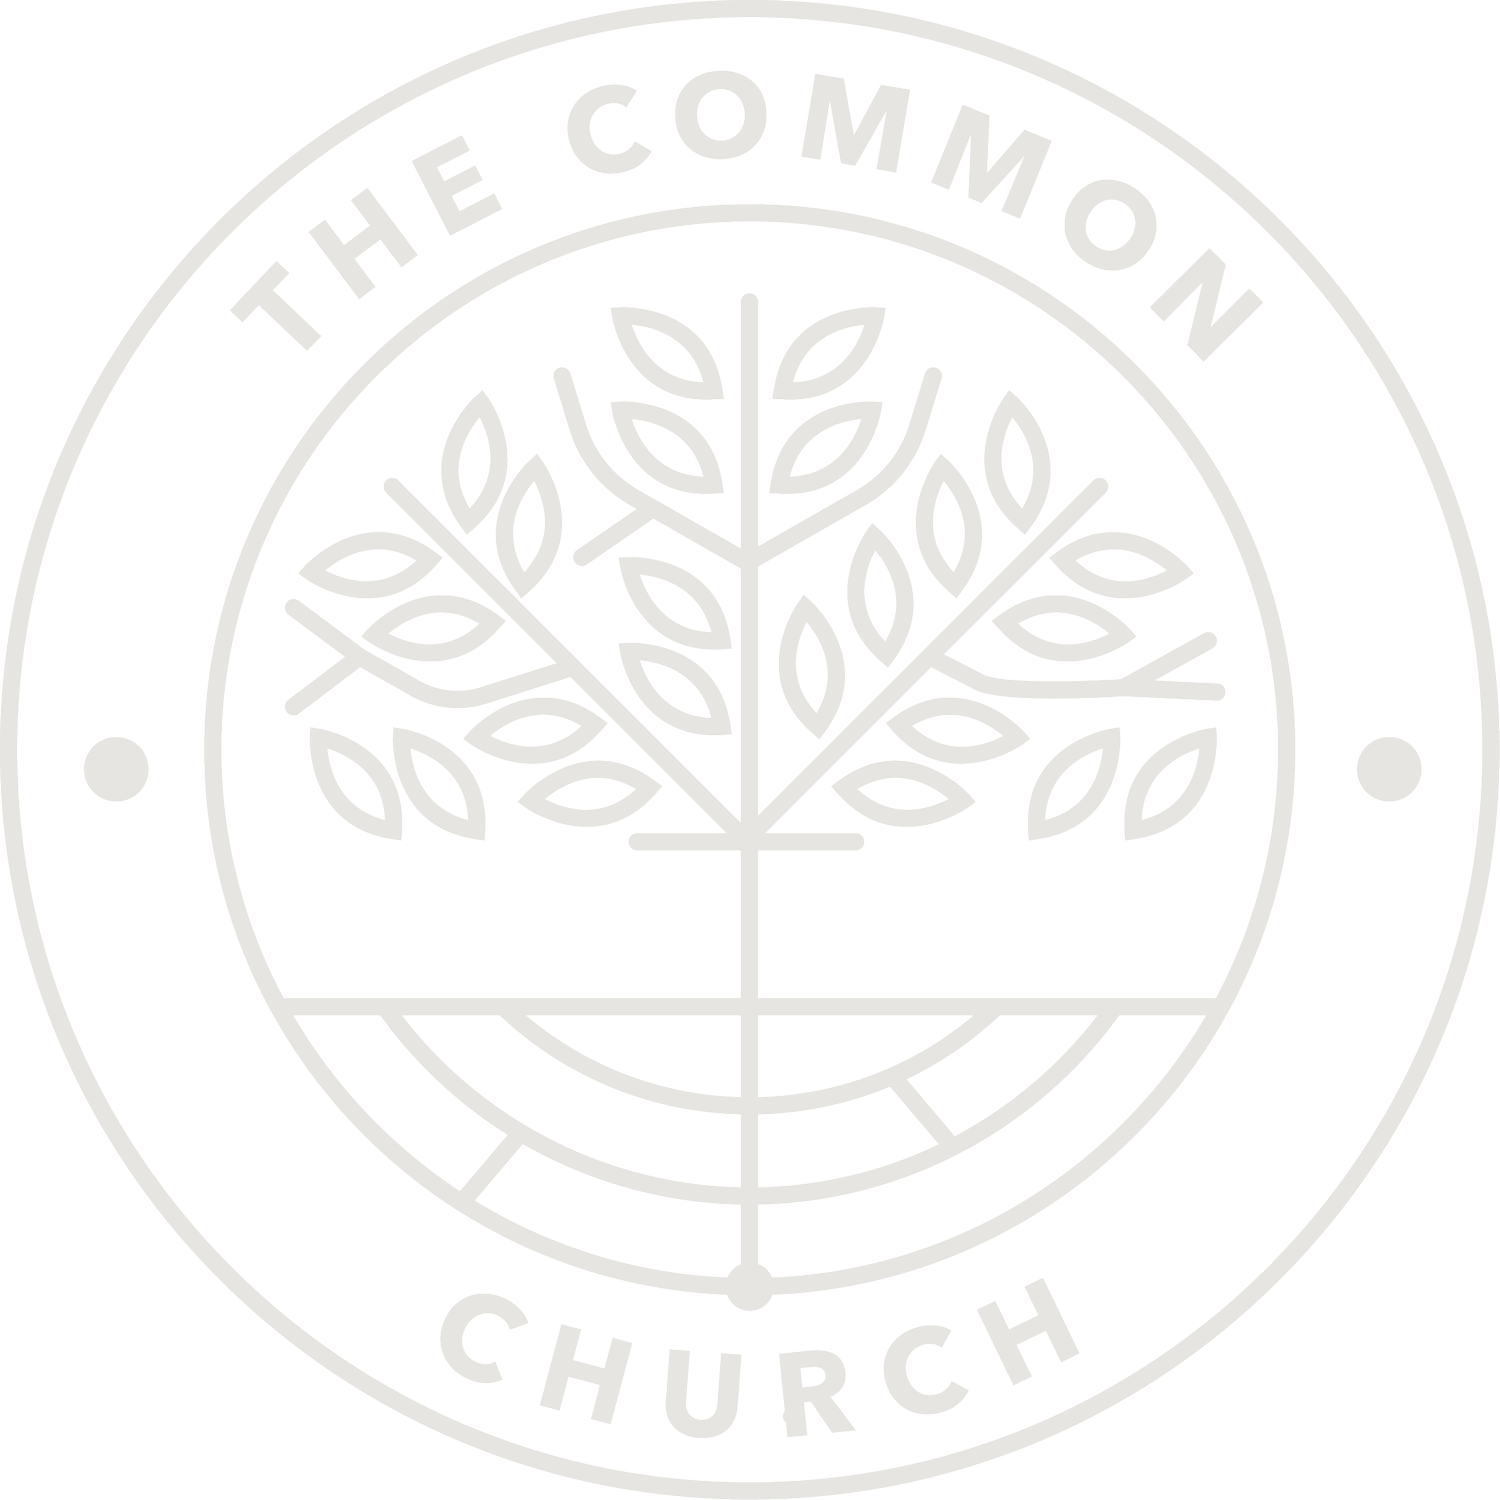 The Common Church